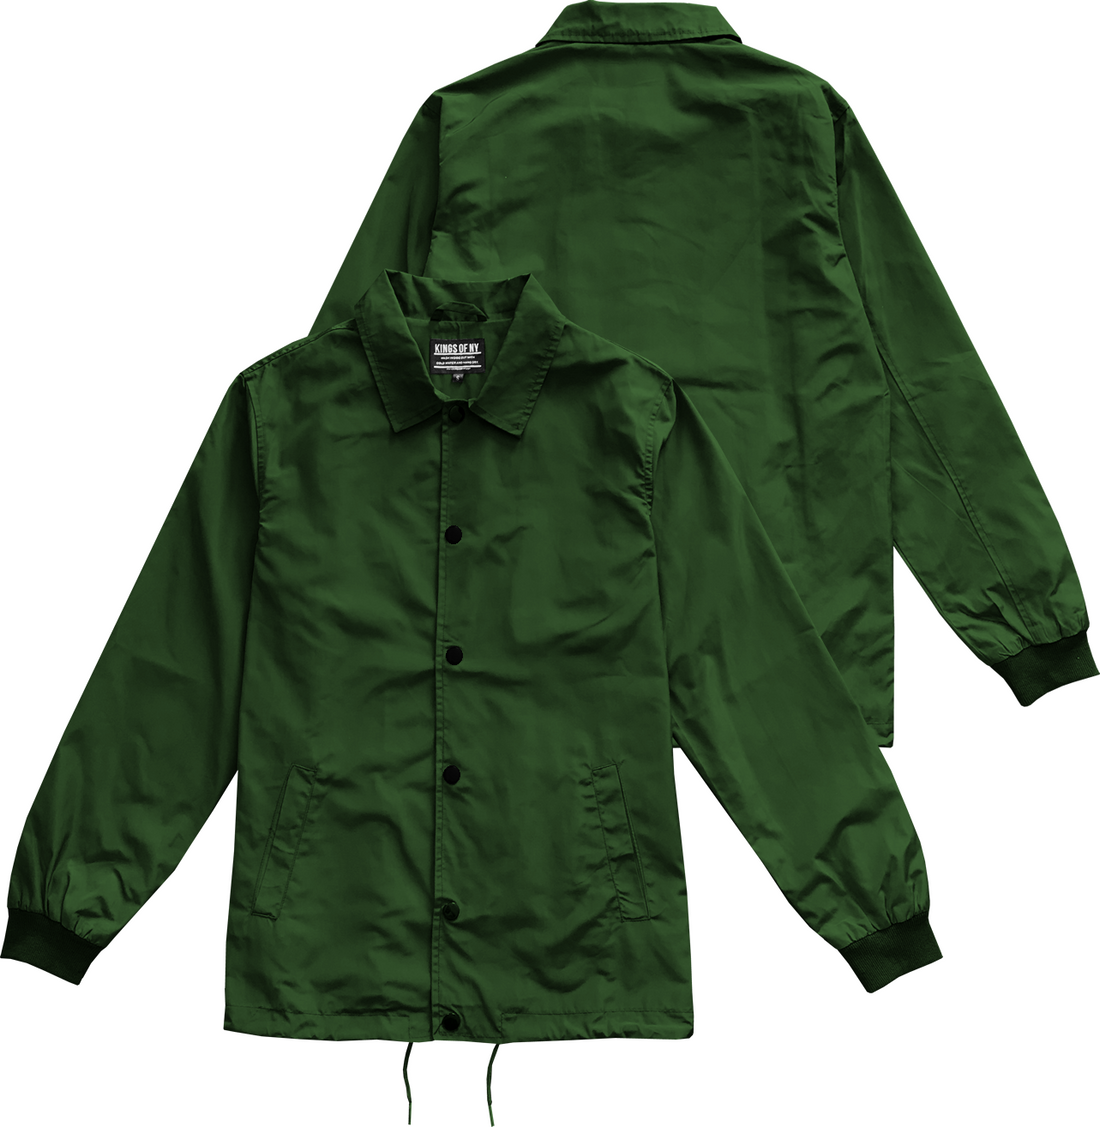 Blank Green Coaches Jacket